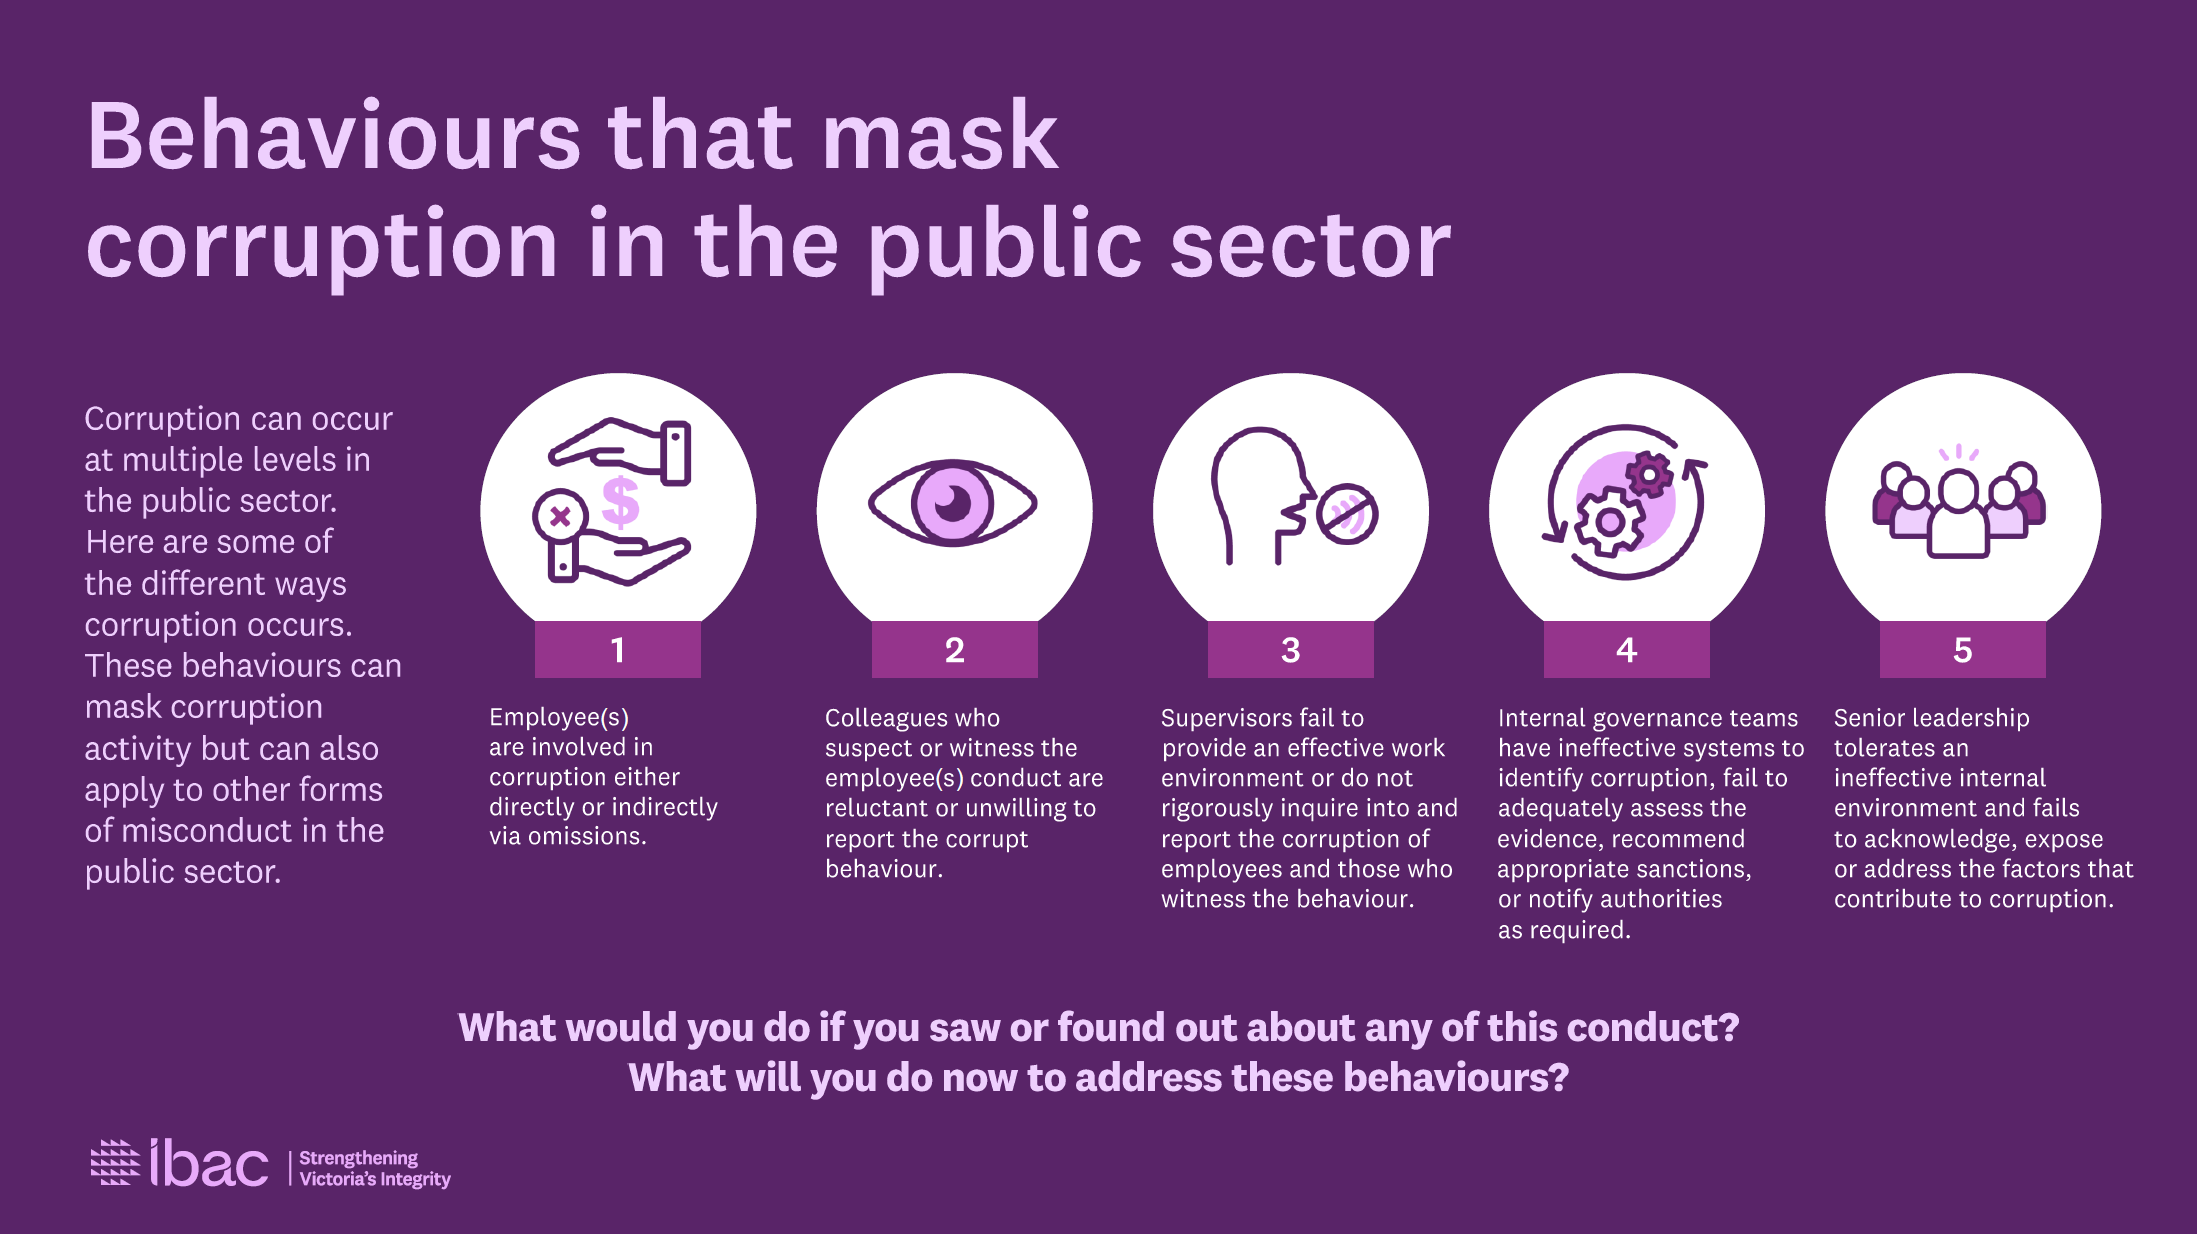 Cover up behaviours that mask public sector corruption